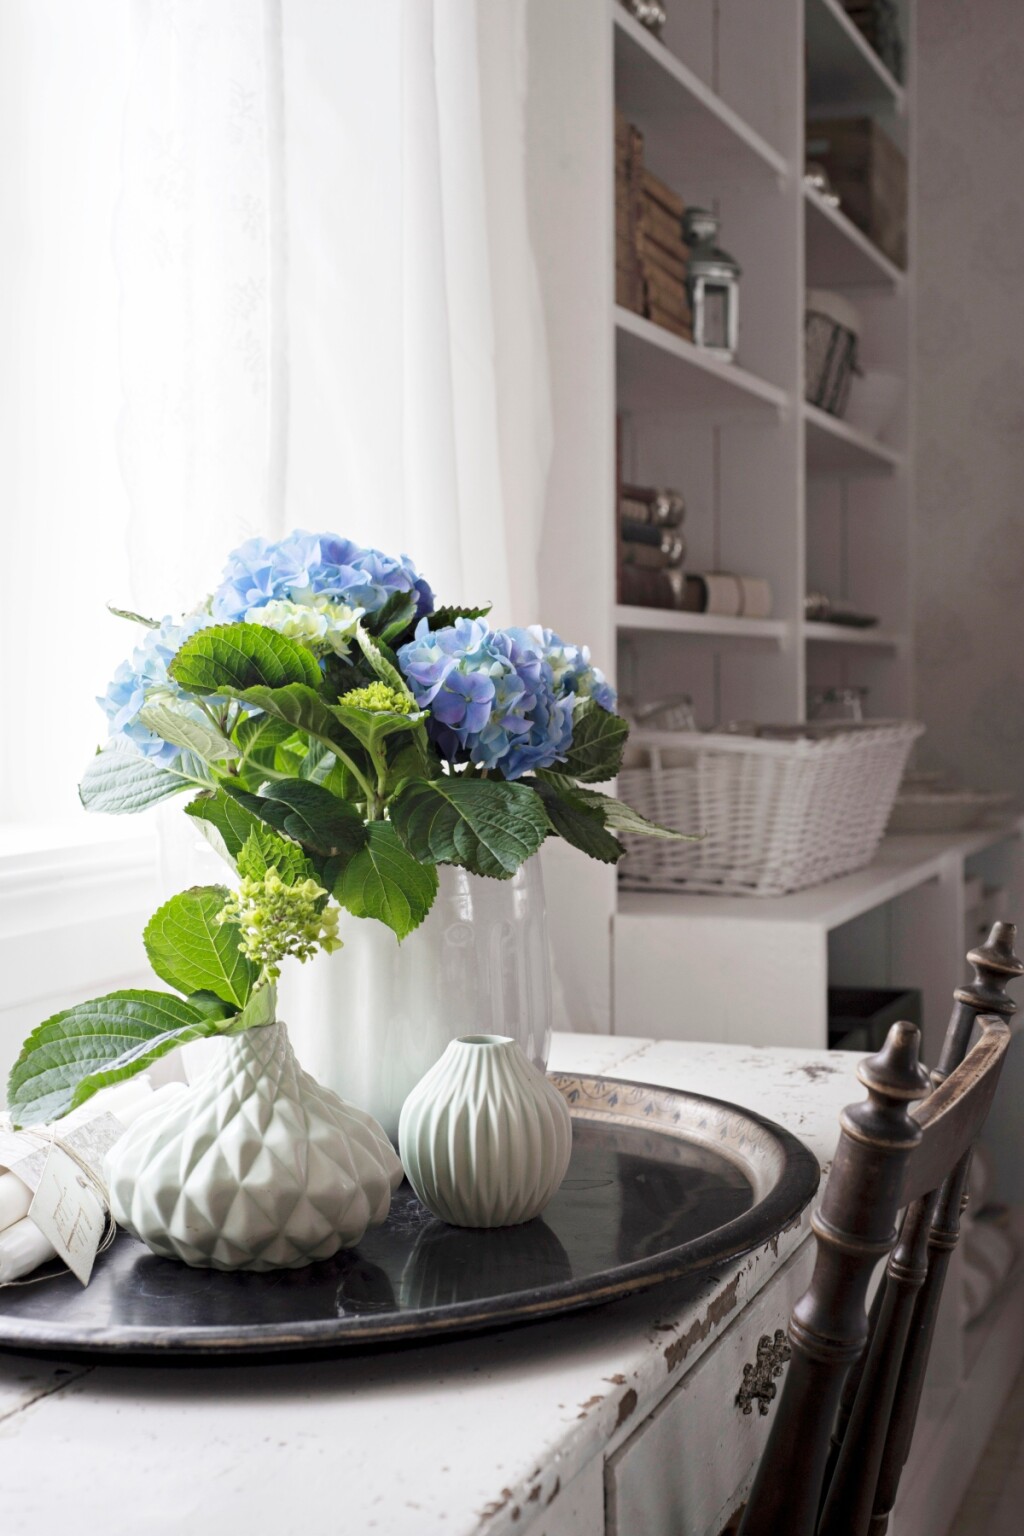 Plave hortenzije divan su ukras doma